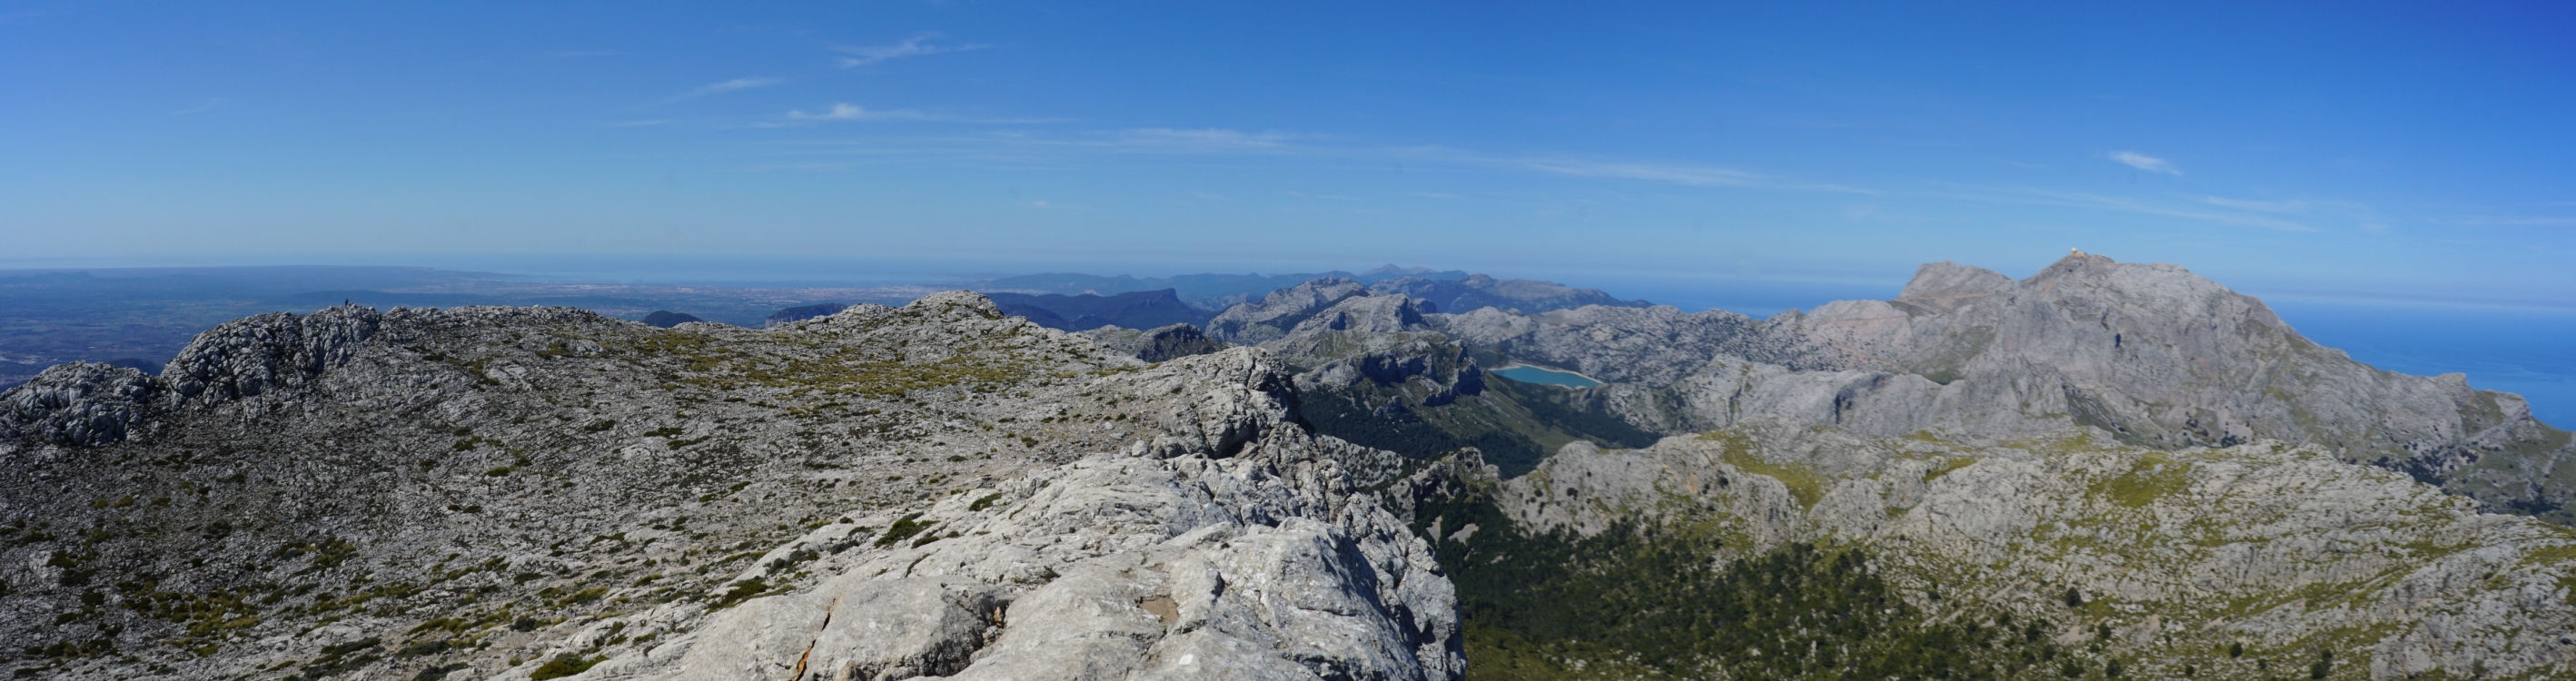 Das Panorama vom Gipfel des Puig de Massanella.